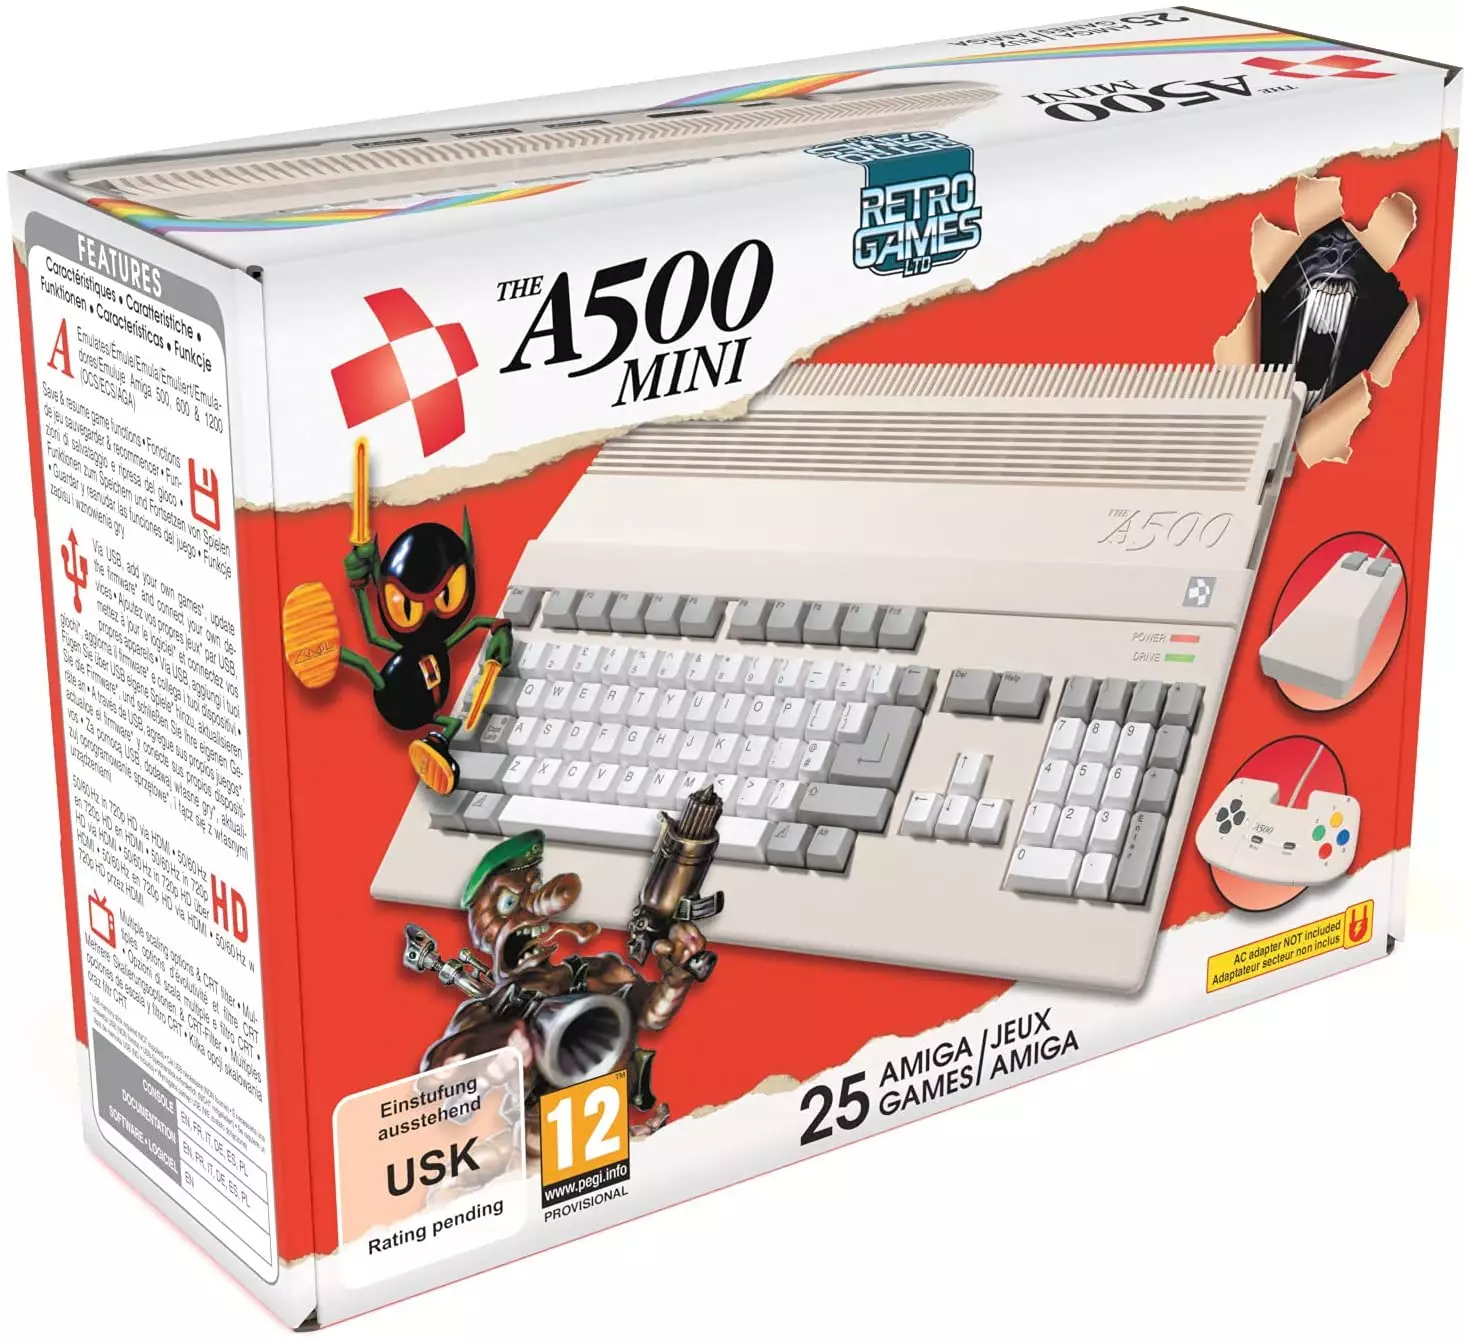 The A500 Mini's box art /